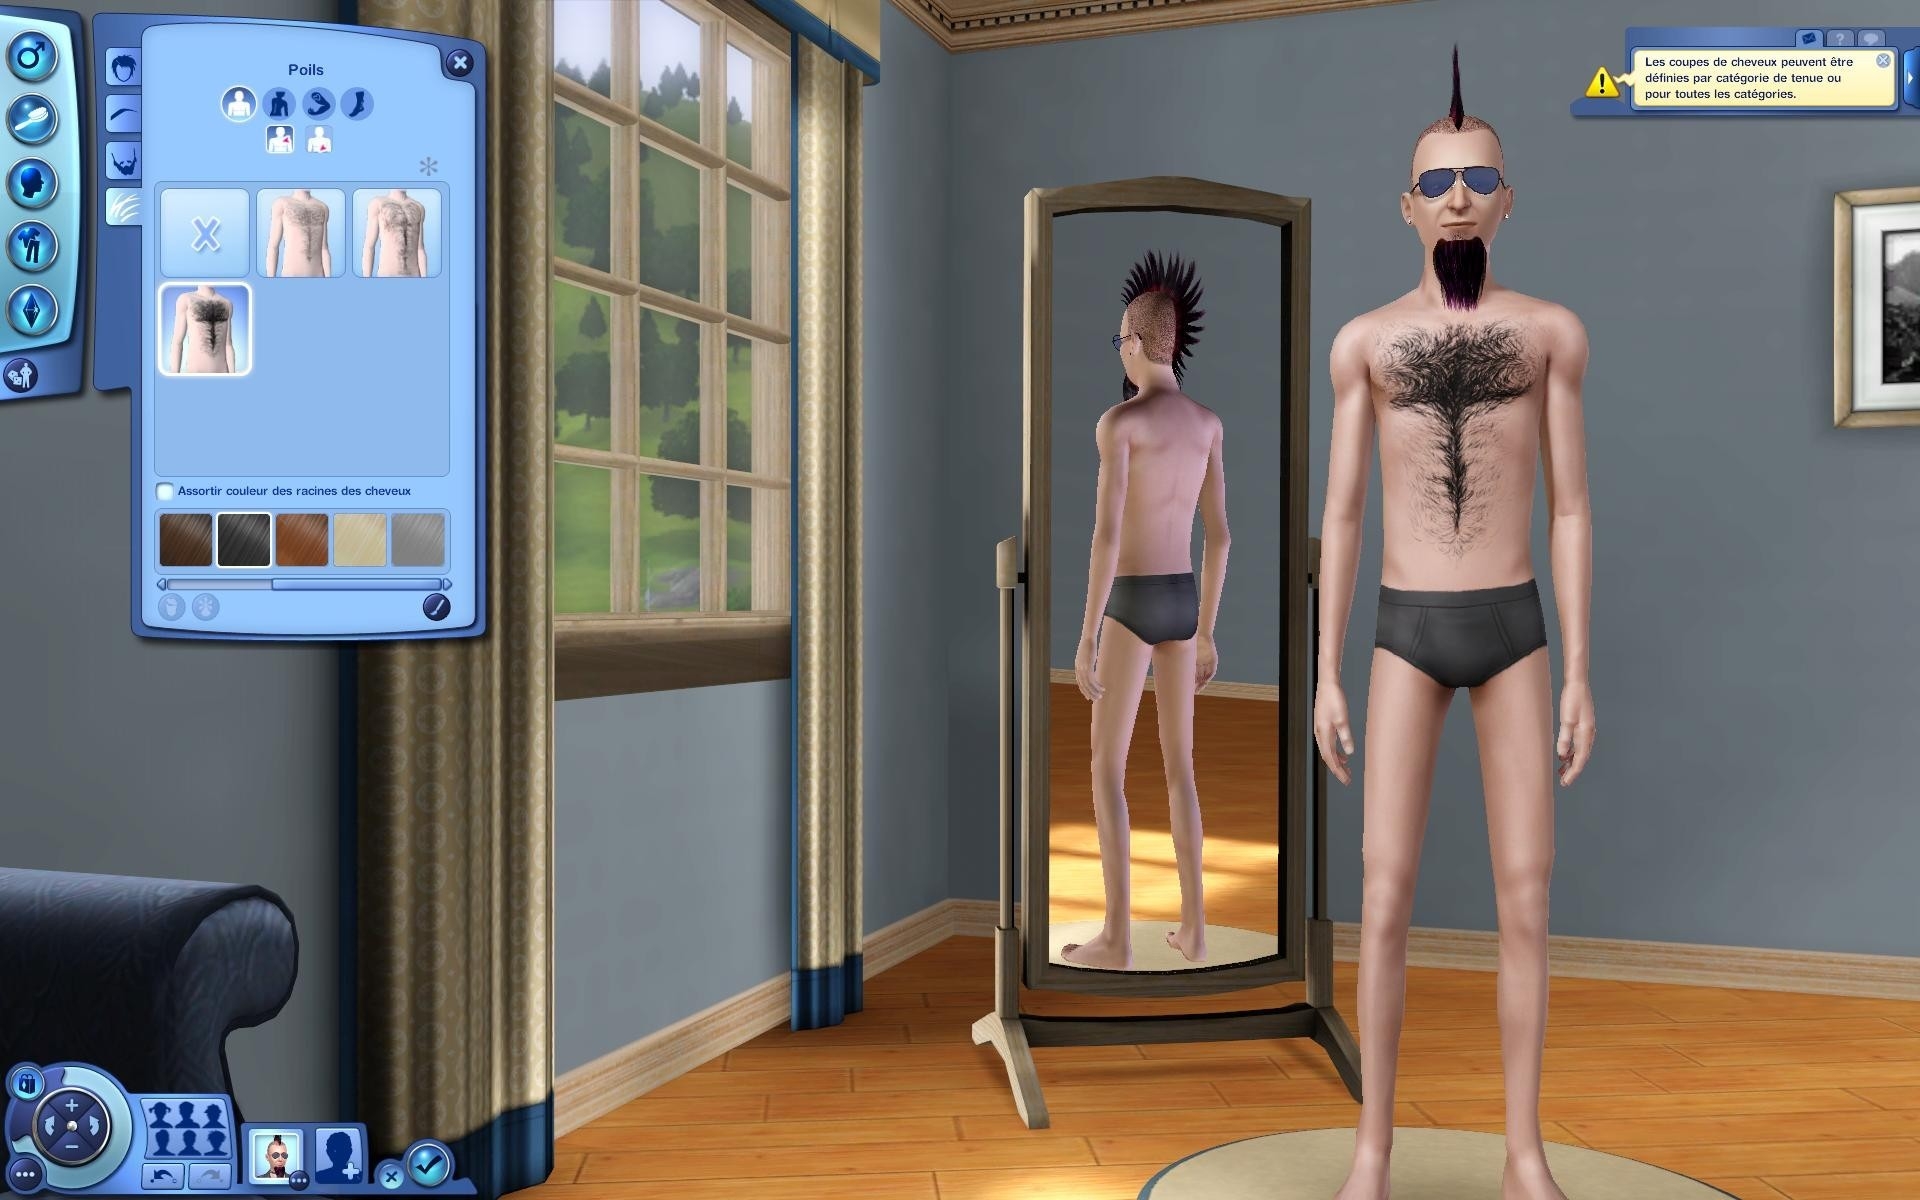 Sims 3 online dating funktioniert nicht alleenstaande ouder en dating